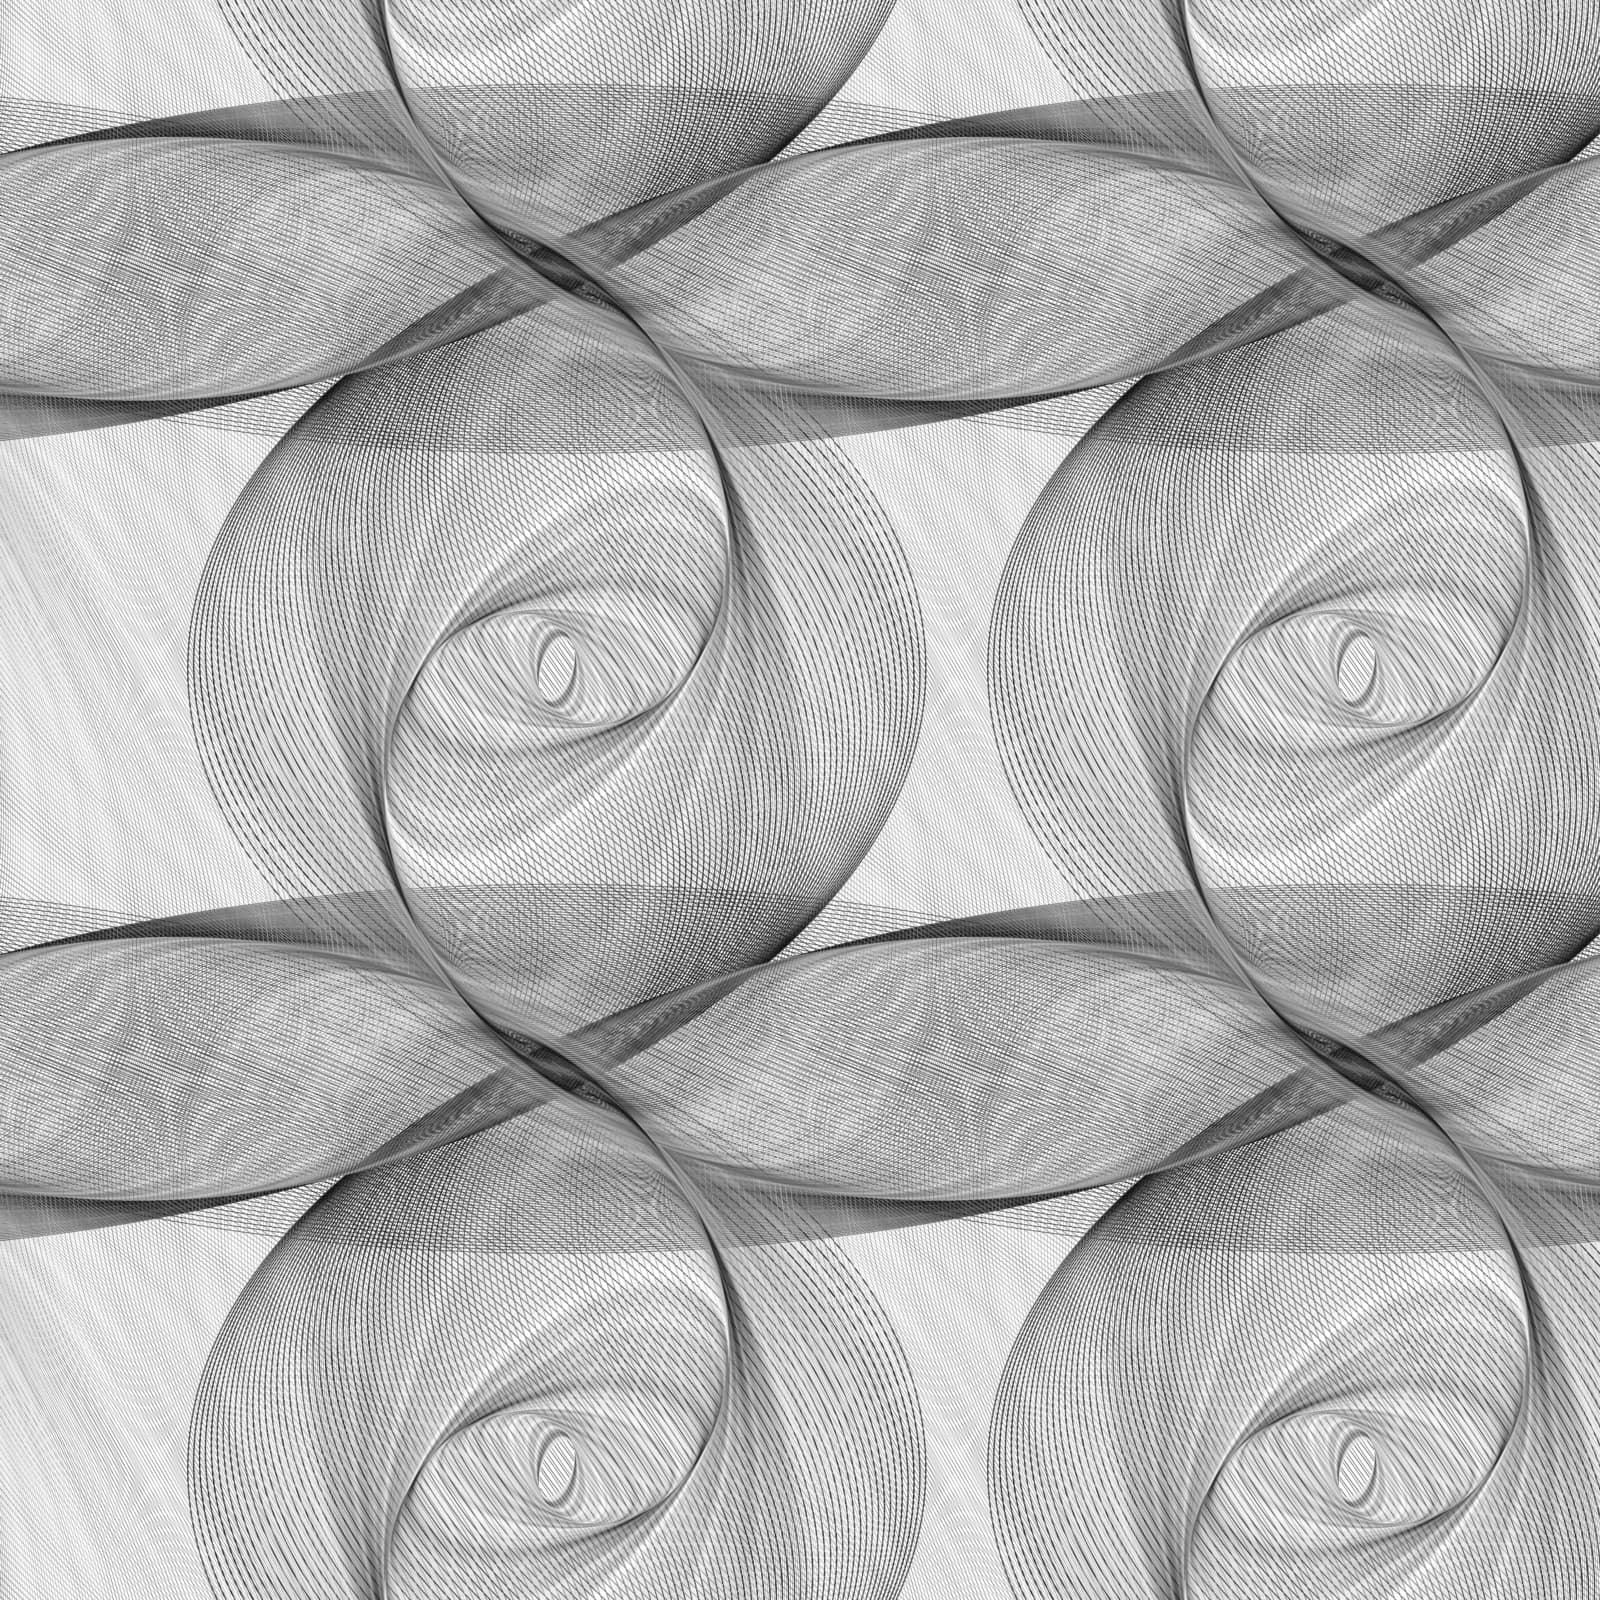 Repeating monochrome ellipse fractal pattern by davidzydd